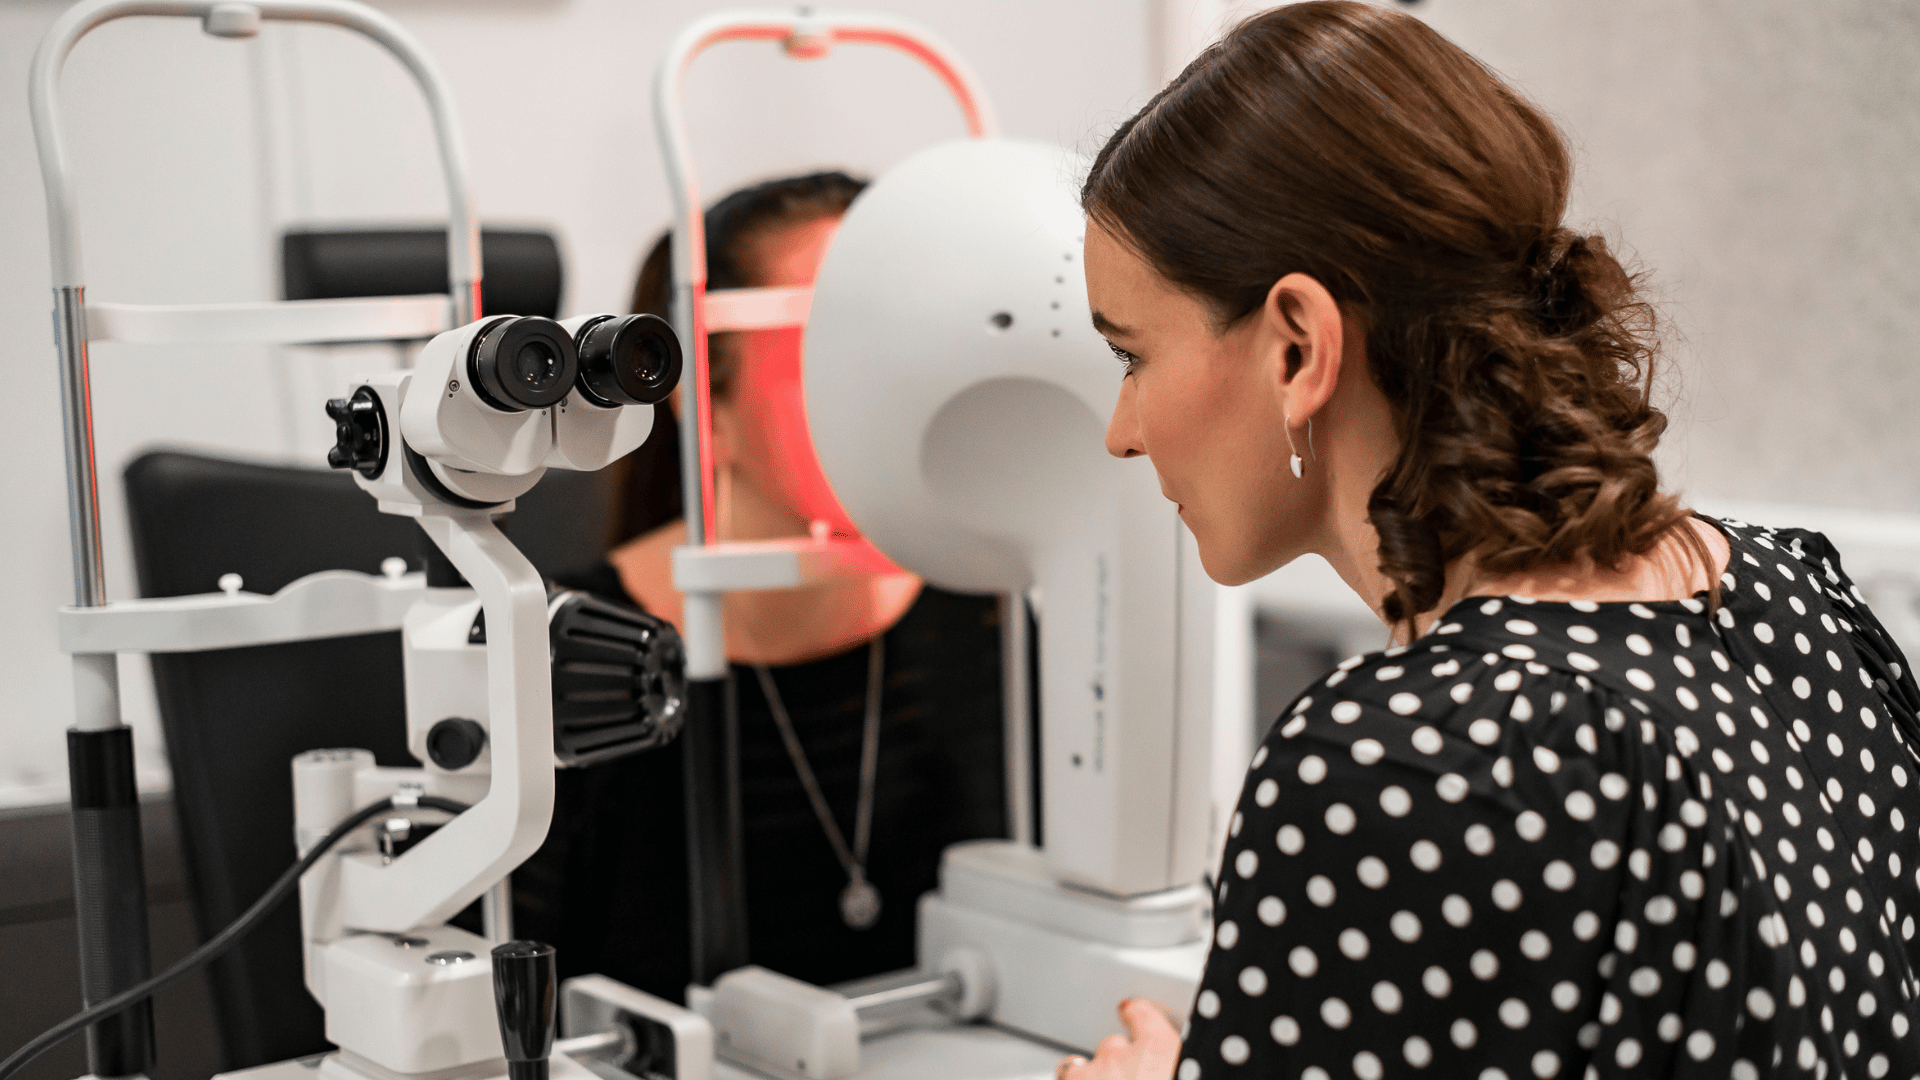 optik-schuett-ludwigsburg-optiker-hoergeraete-optometrische-keratograph-kontaktlinsenanpassung-traenenfilmanalyse